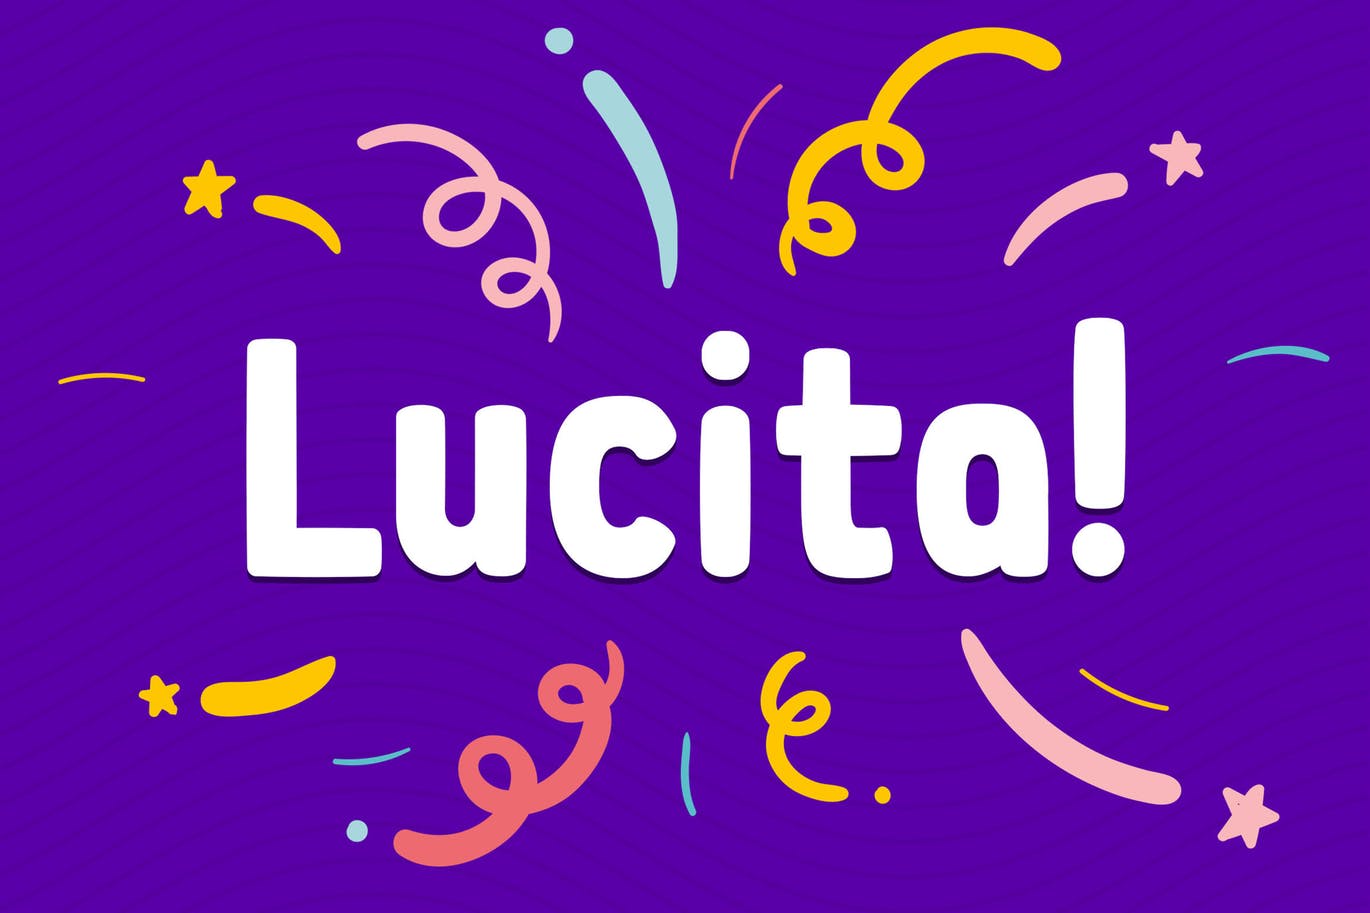 Lucita a fun sans serif logo font